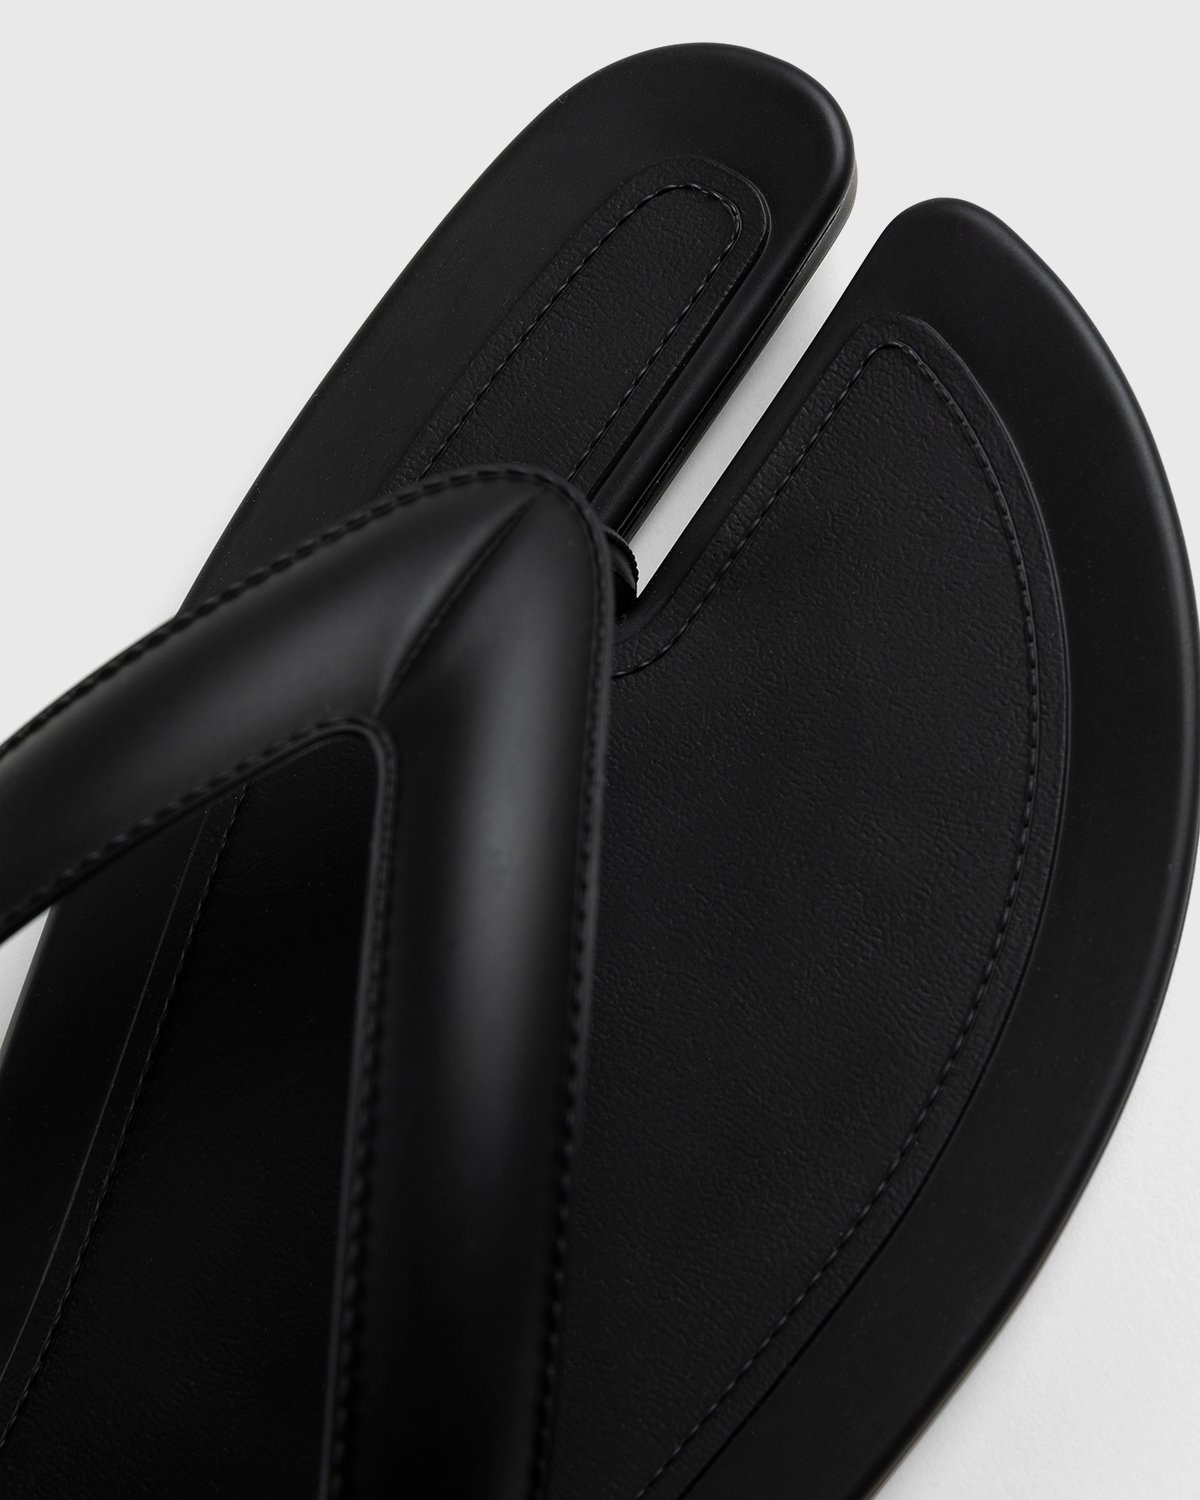 Maison Margiela – Tabi Flip-Flops Black - Sandals - Black - Image 5